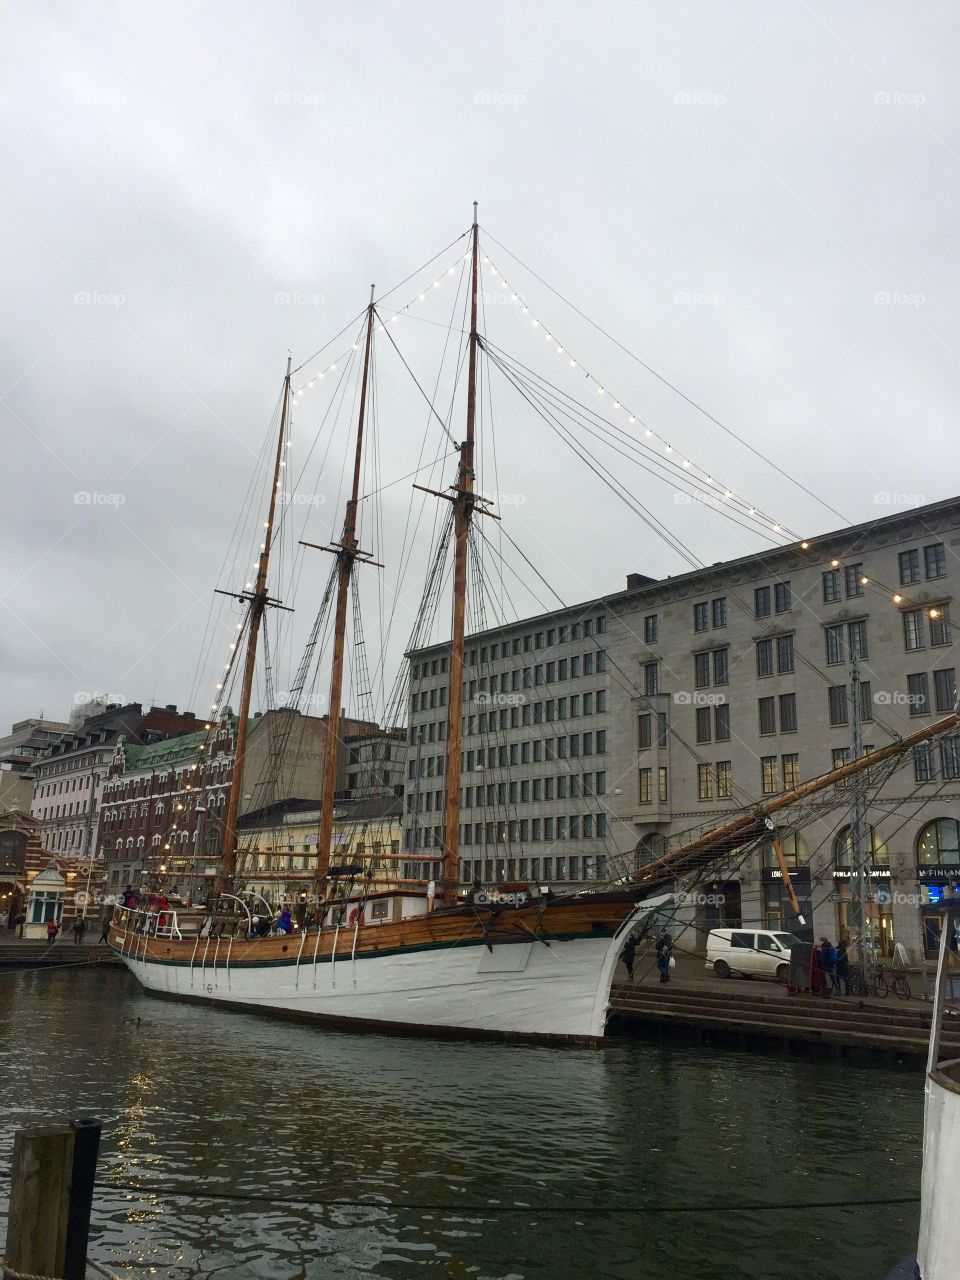 Helsinki ship